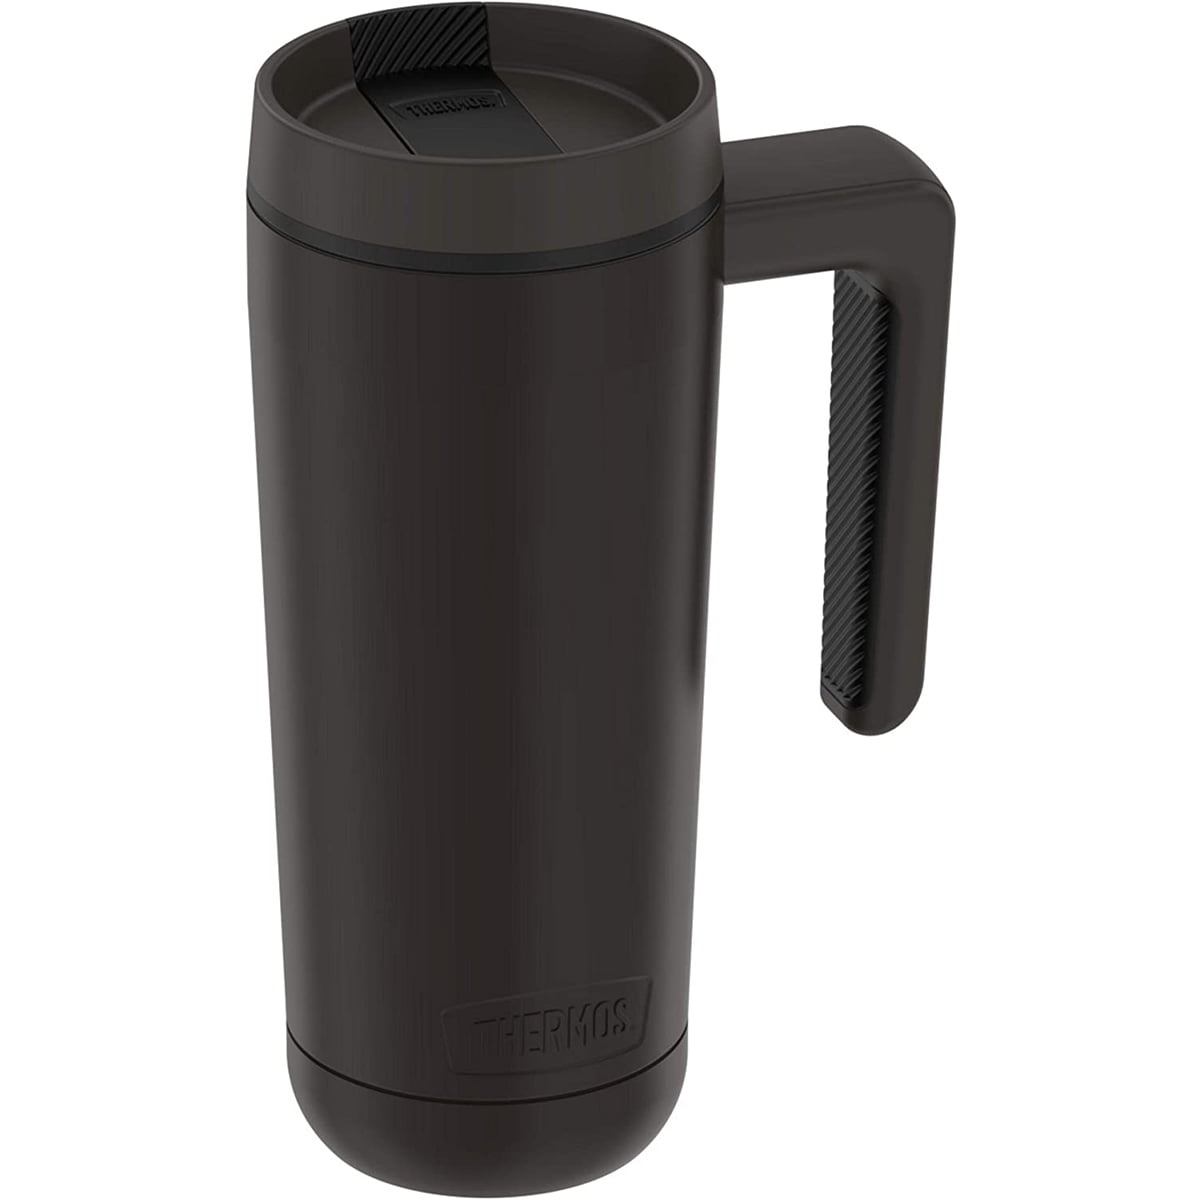 Thermos 24 Oz. Alta Stainless Steel Bottle - Espresso Black : Target